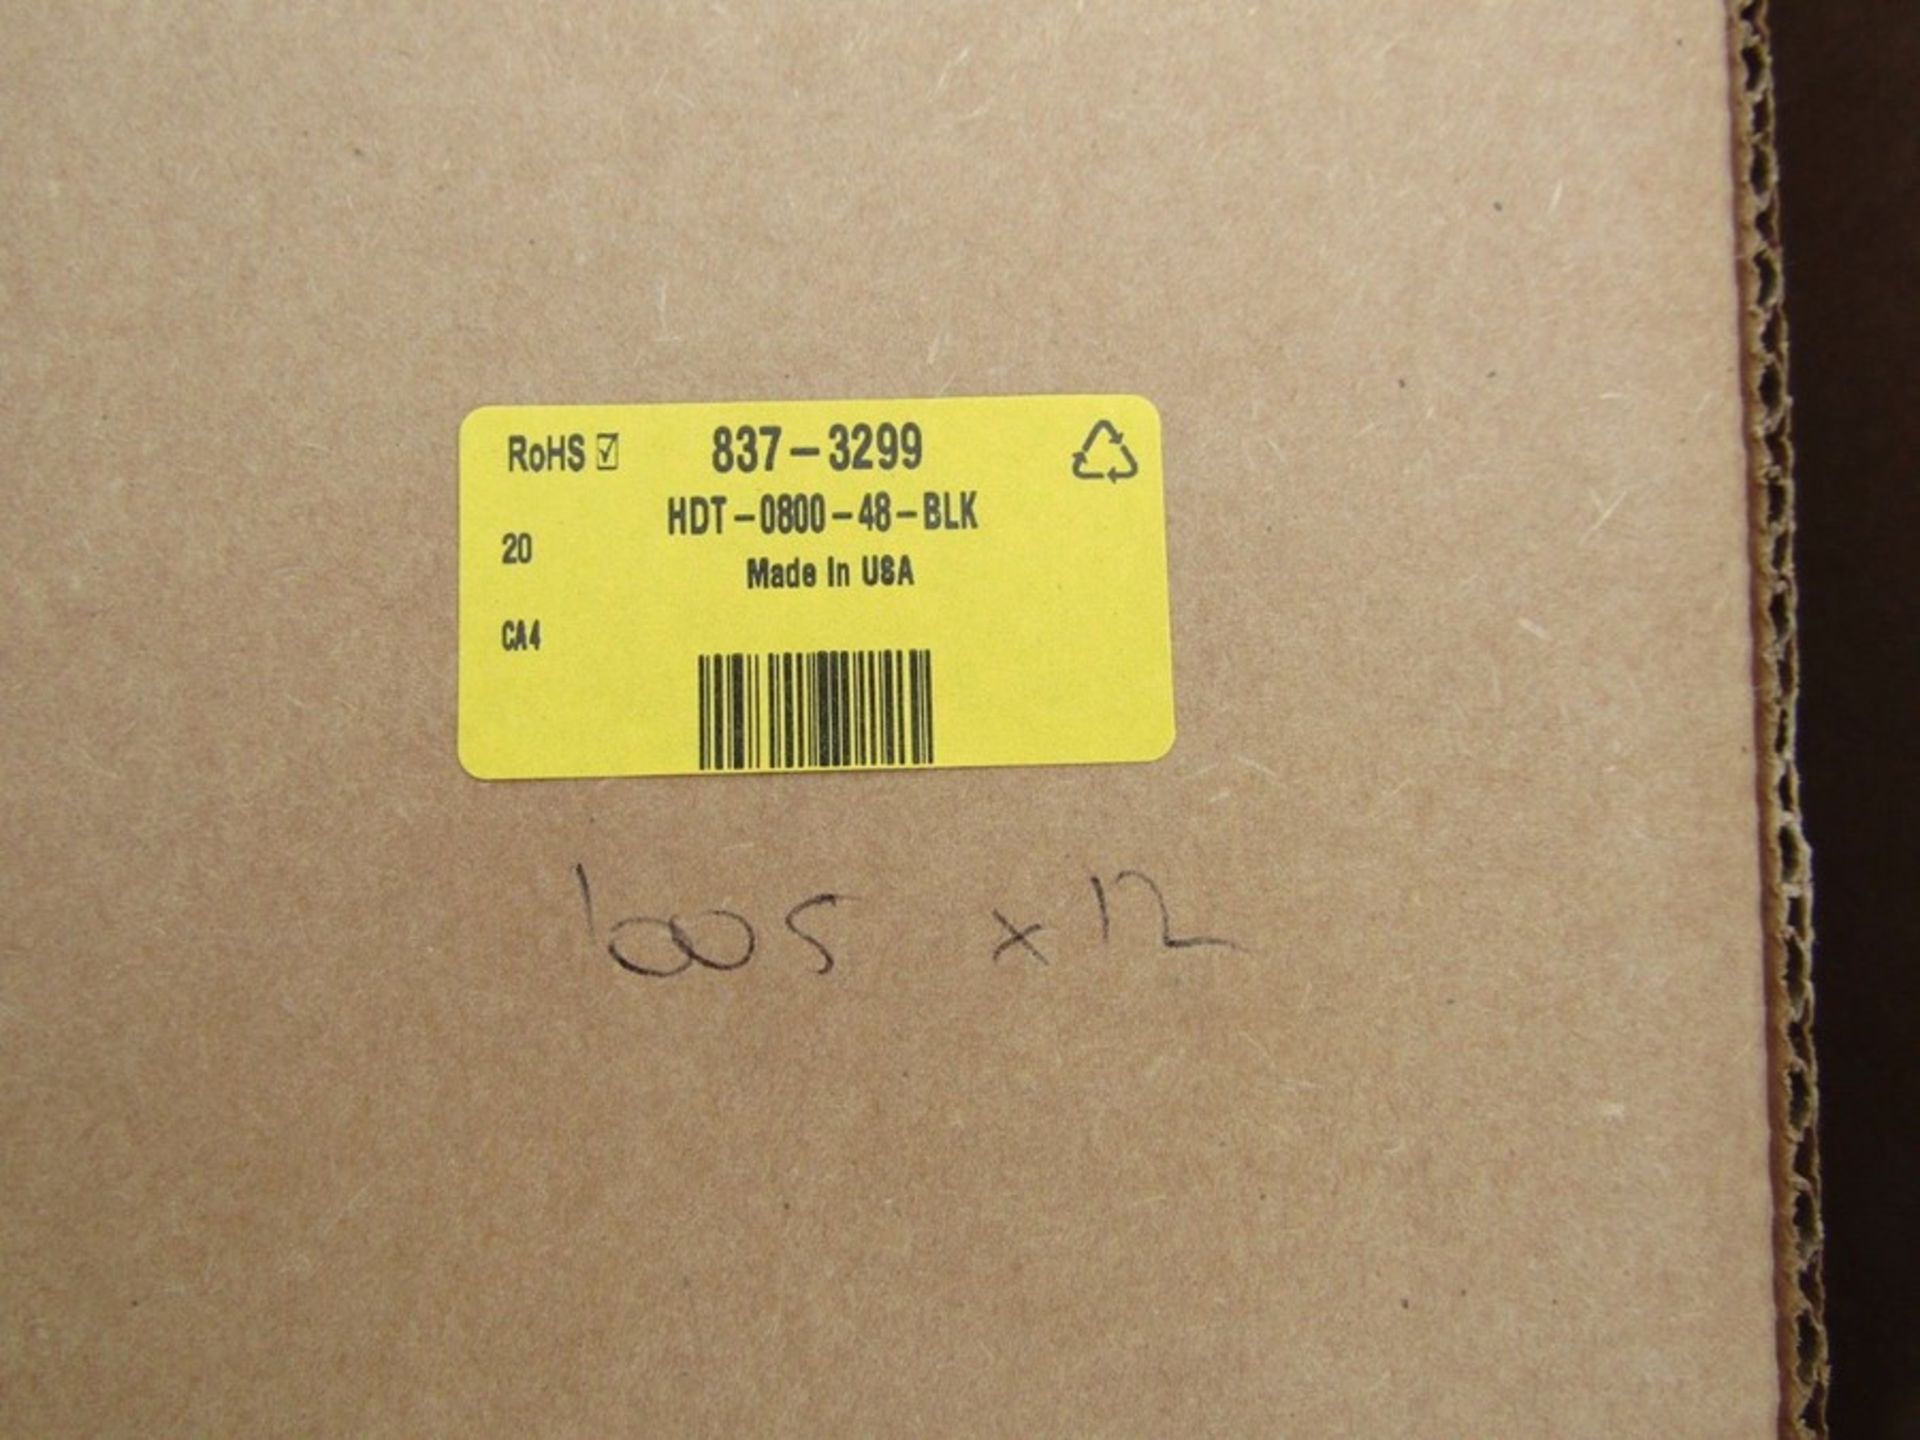 BOX of 20 x 3M Black Heat Shrink Tubing 3:1 20.3mm Dia x 1.219m - 1005 8373299 - Image 4 of 4